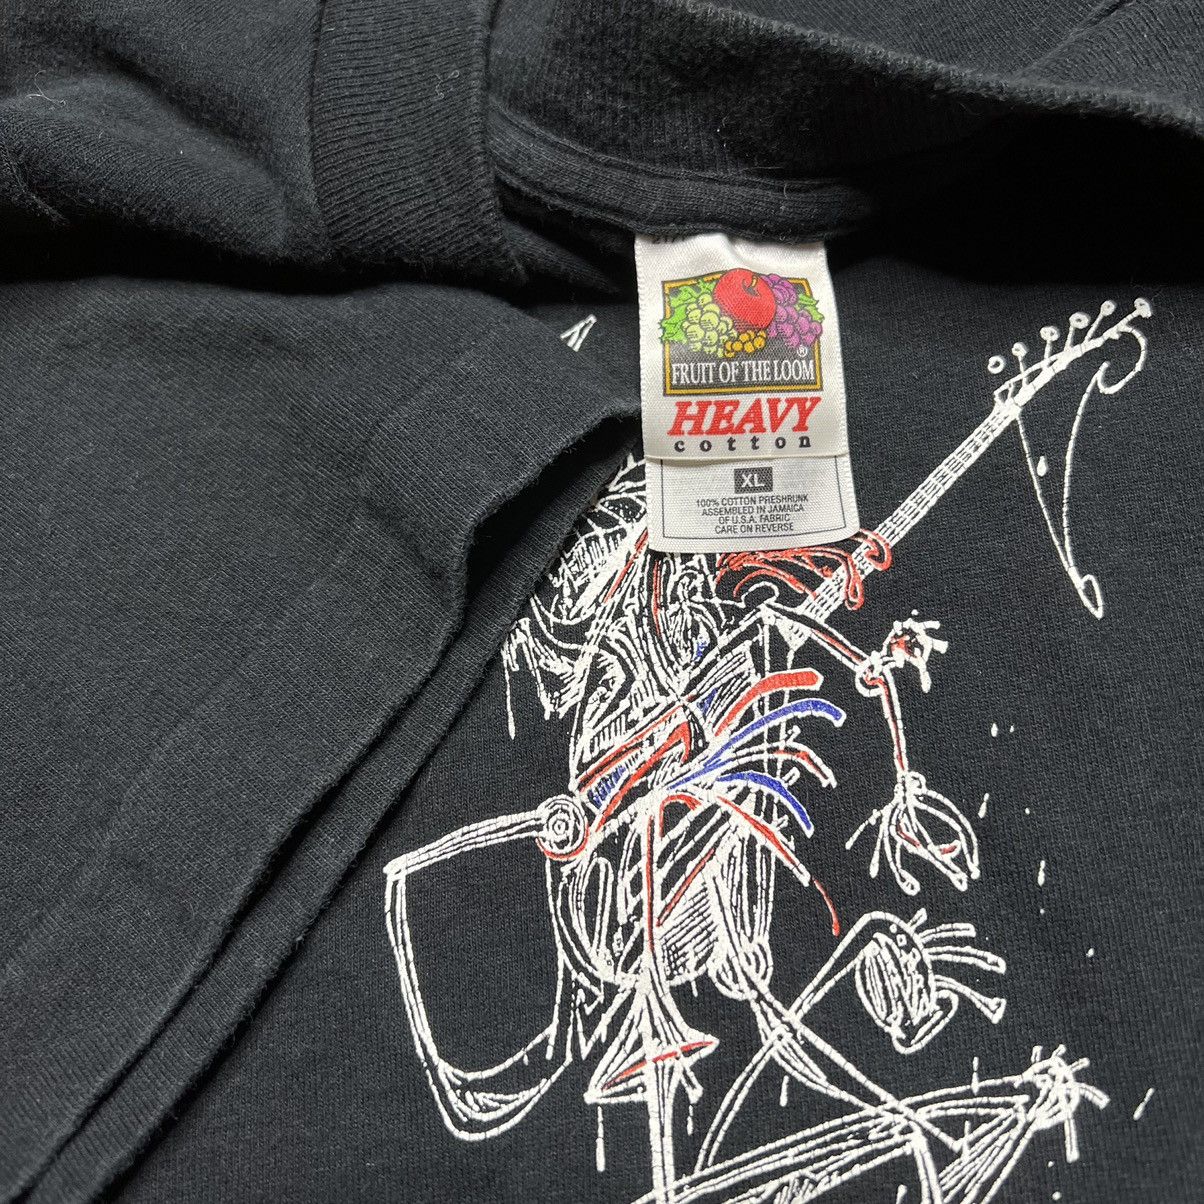 Vintage Vintage Nils Lofgren Crooked Line Band T-Shirt Size US XL / EU 56 / 4 - 3 Preview